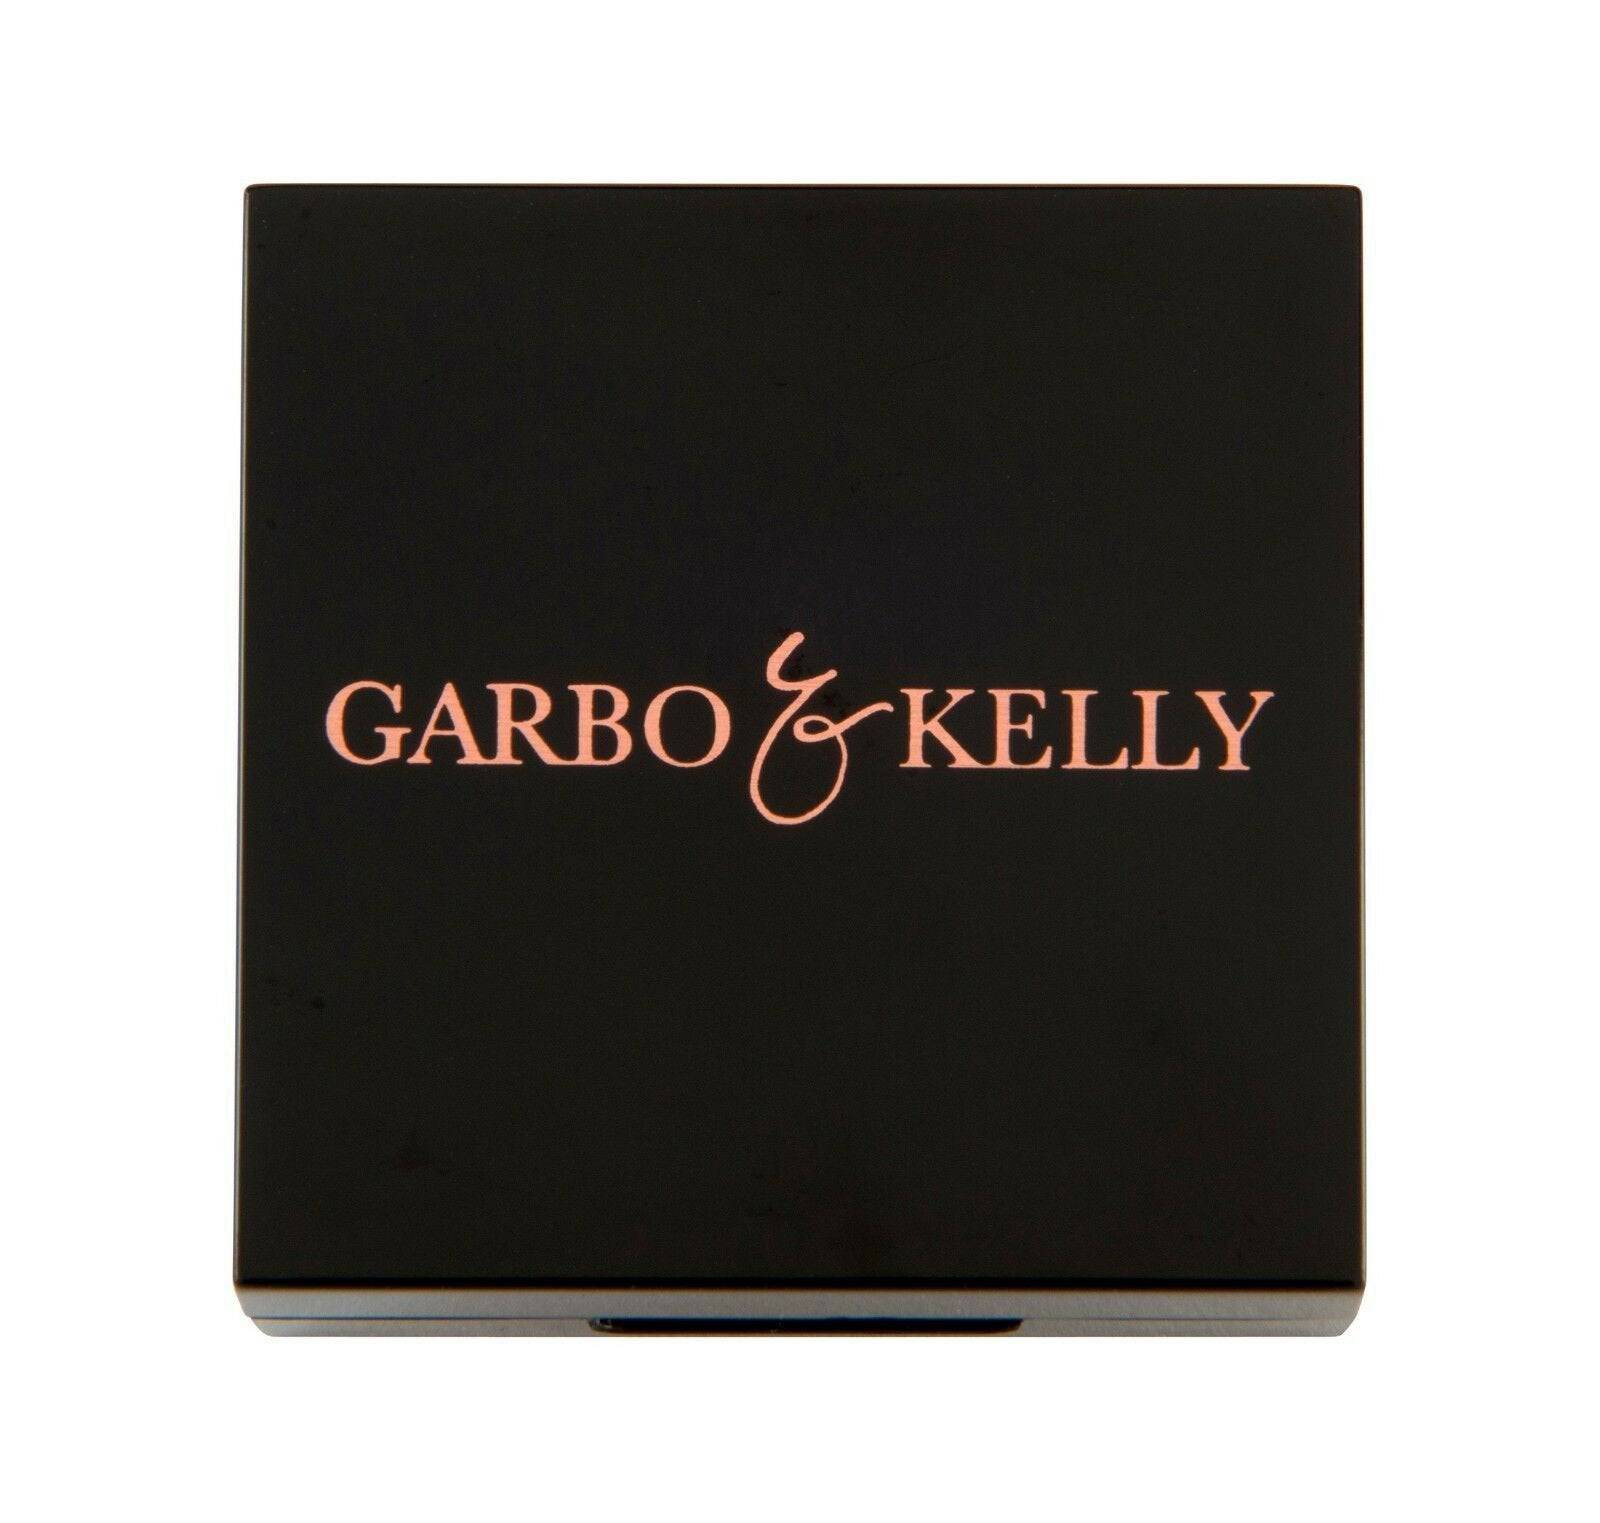 Garbo & Kelly Cool Brown- Brow Powder x 1 - On Line Hair Depot